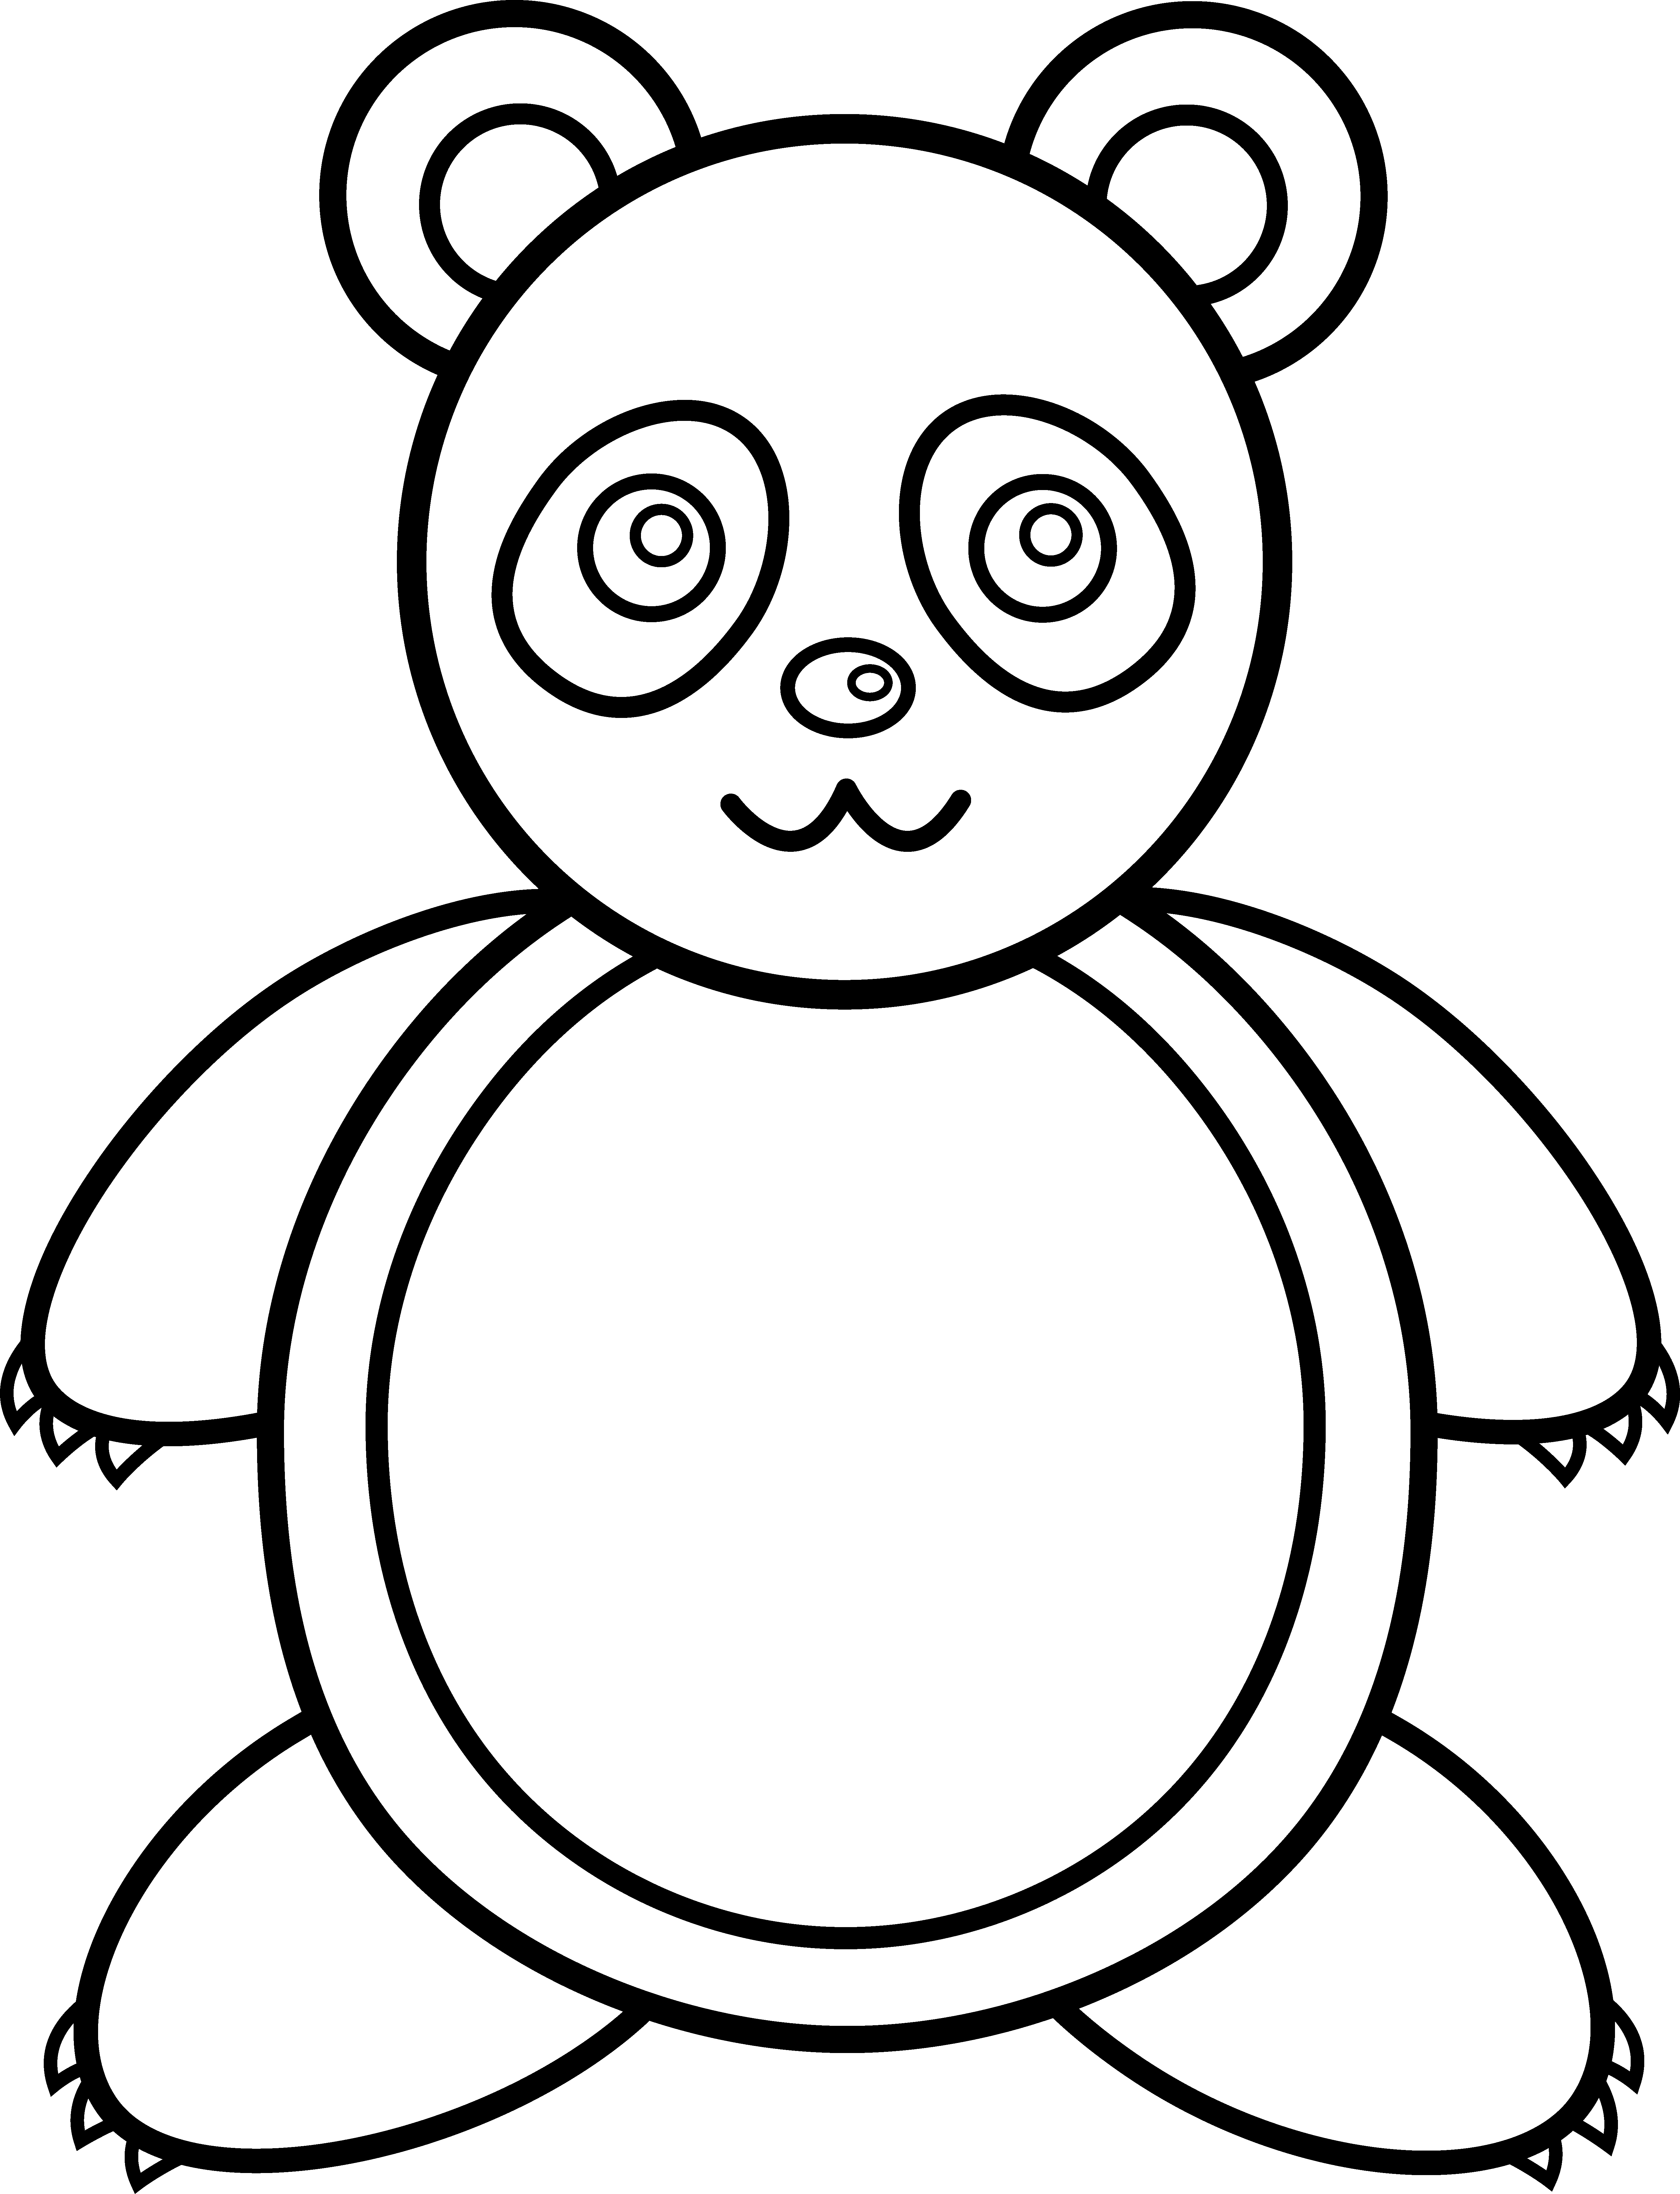 Free Panda Bear Outline, Download Free Panda Bear Outline png images